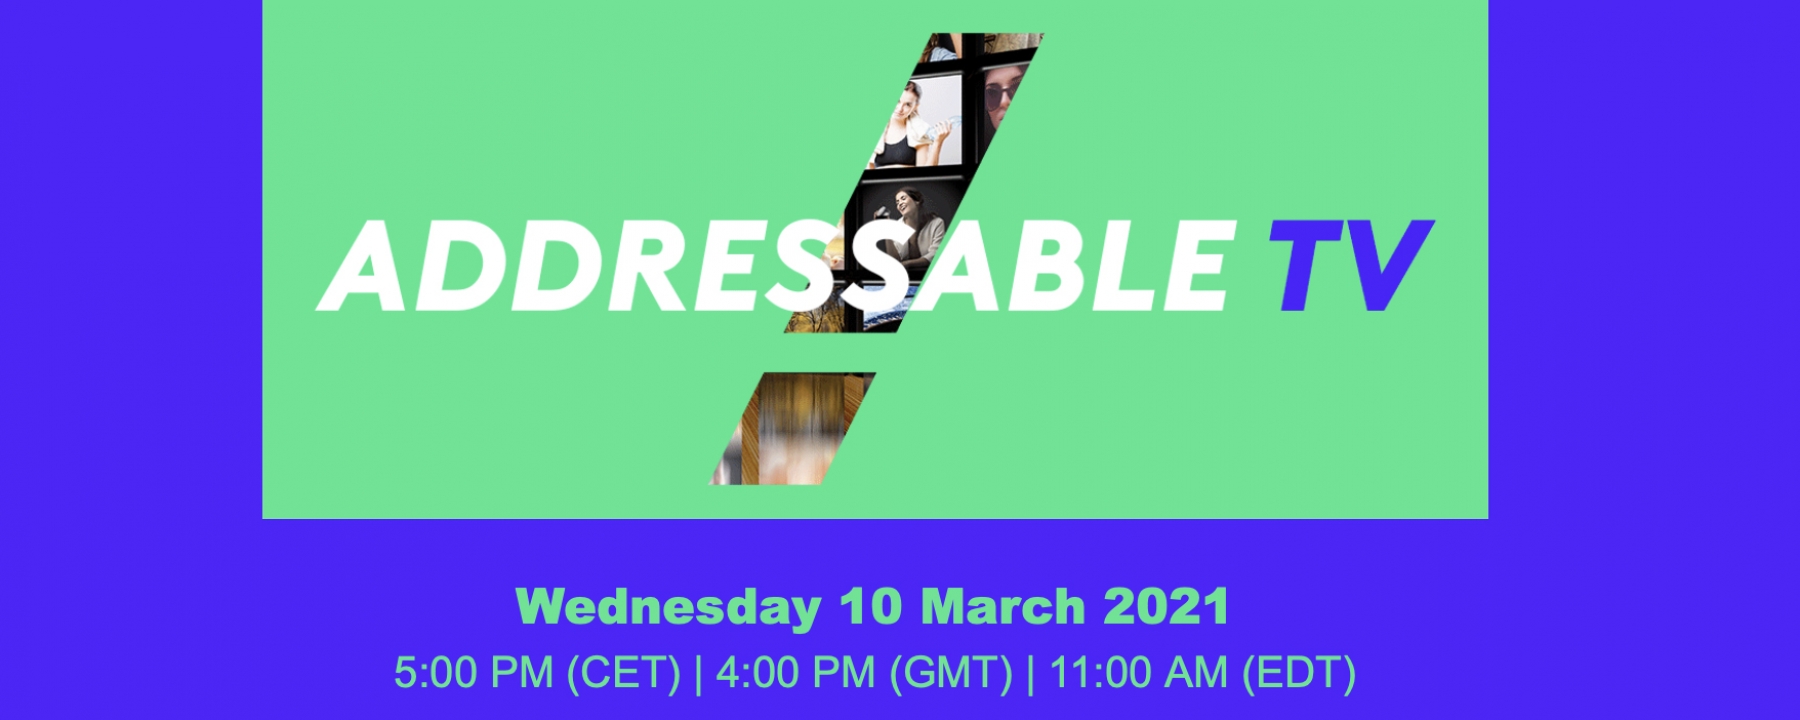 Your guide to Addressable TV in Europe, un webinar organisé par RTL AdConnect le 10 mars 2021